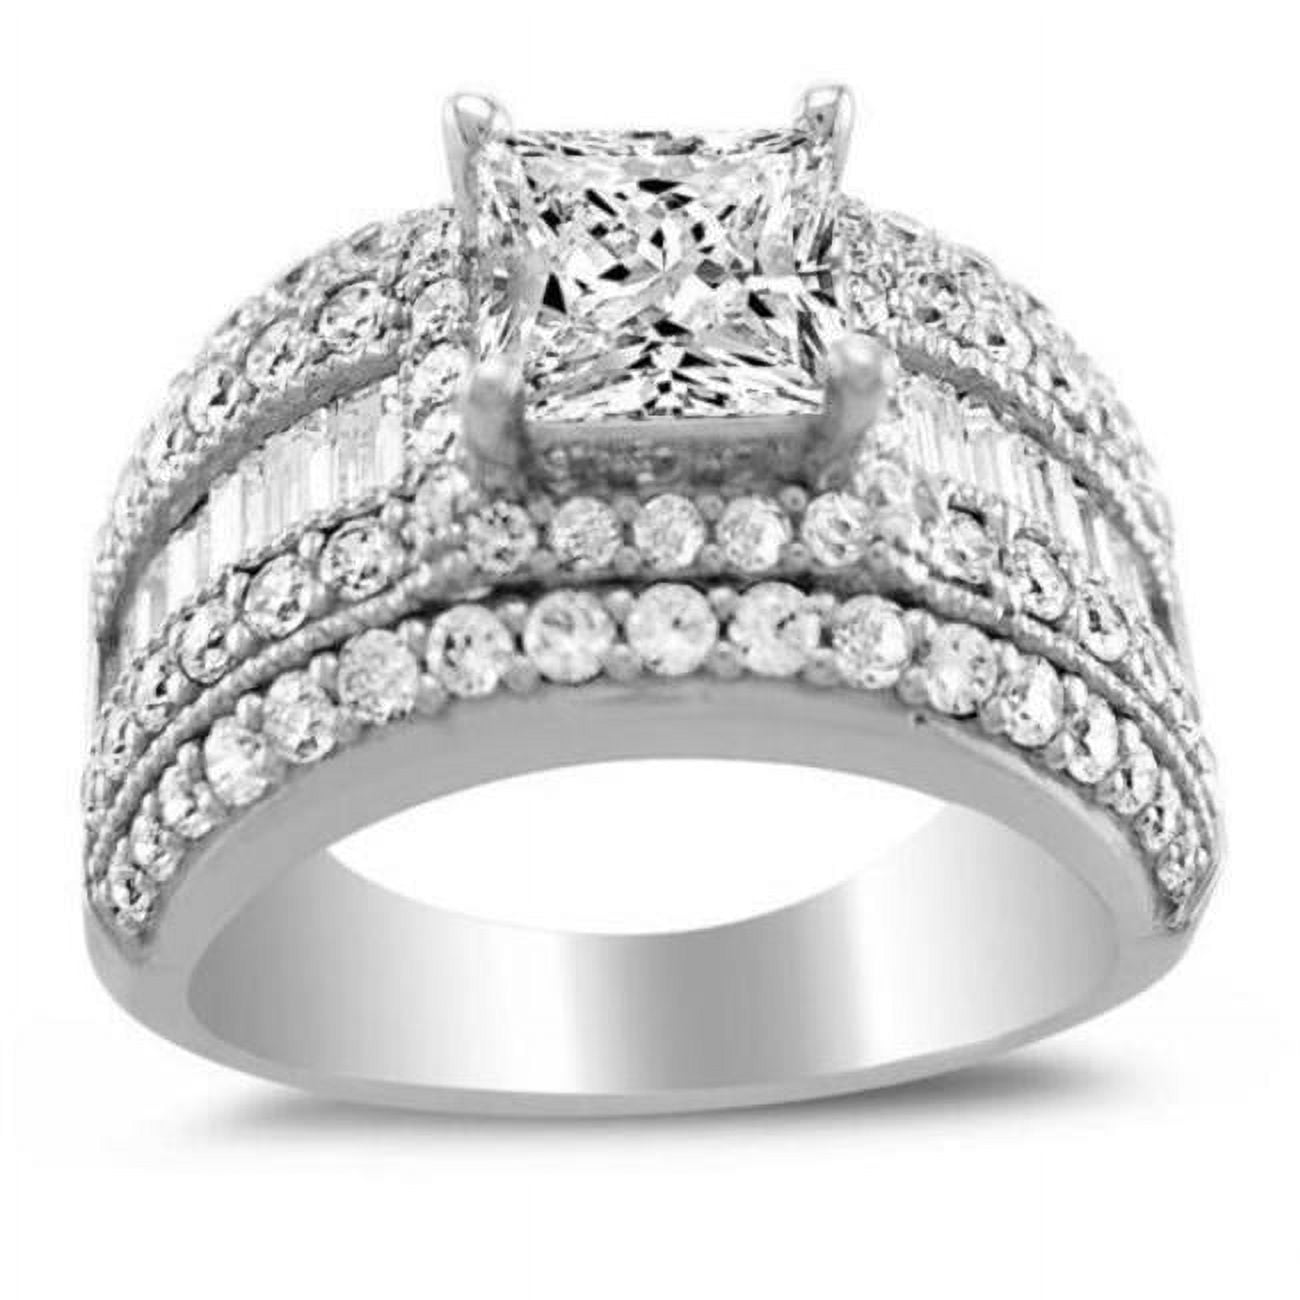 OS0065-RG-sz6 14K White Gold 2.5CT TGW Princess-cut Diamonette Engagement Ring, Size 6 -  Precious Stars, OS0065-RG_sz6